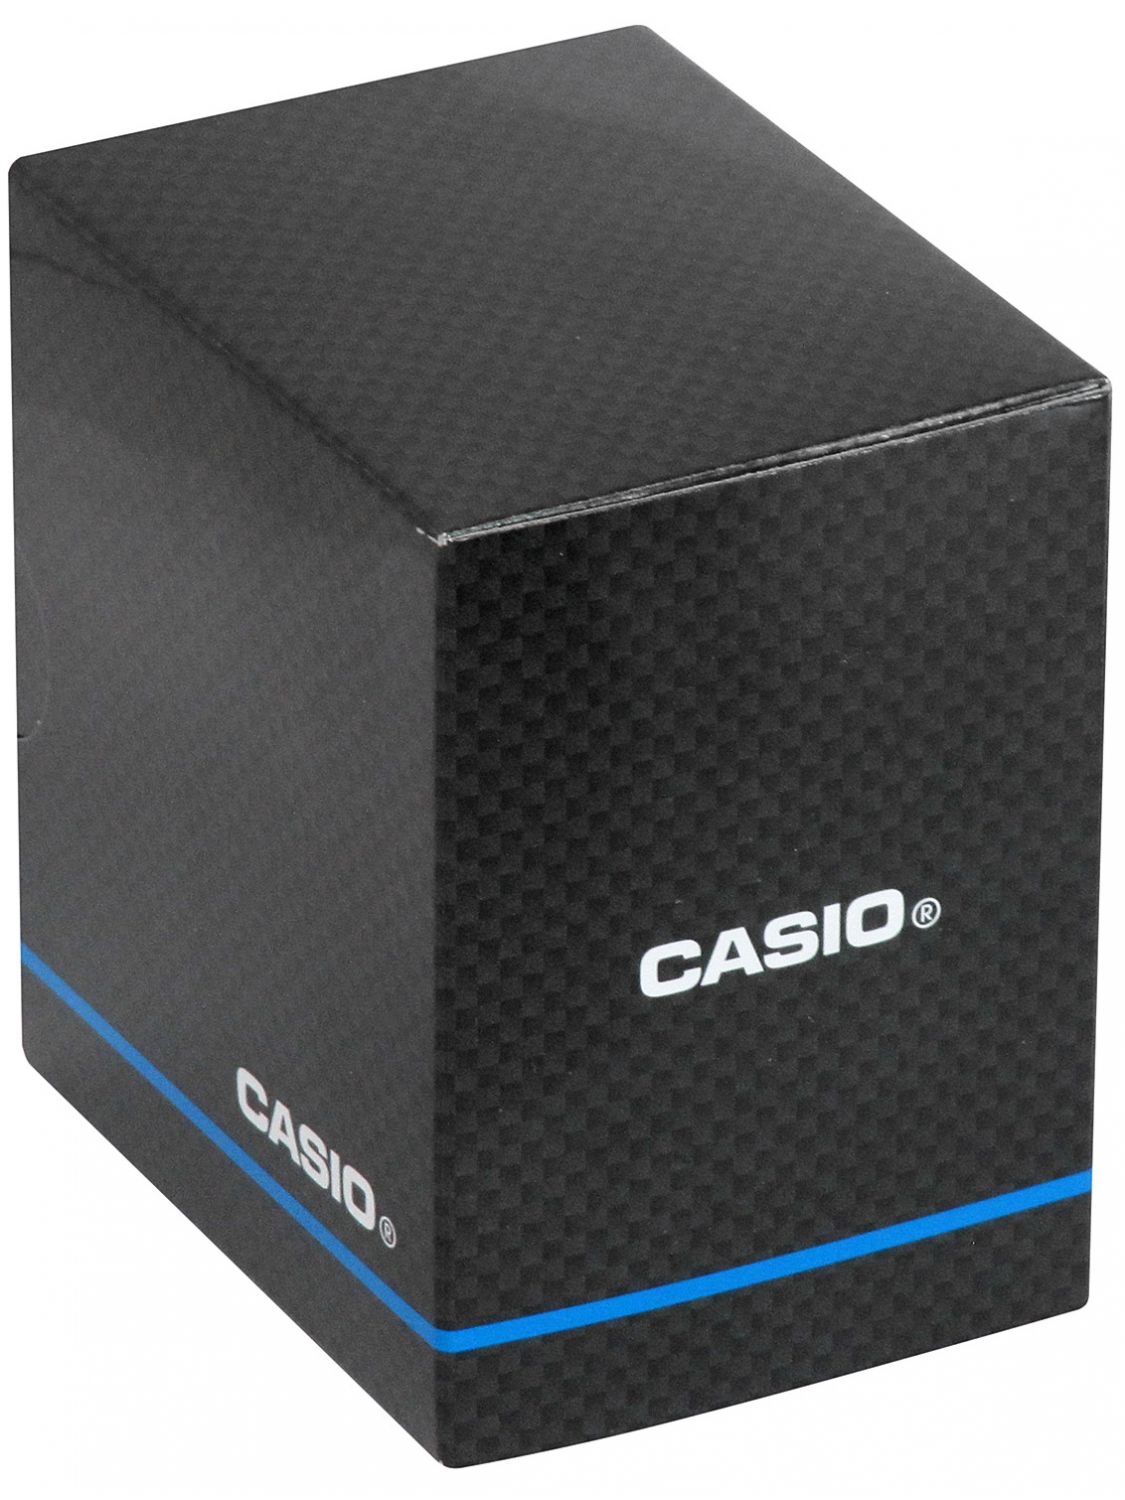 Casio Retro Digital Damenuhr LA670WEM-7EF • uhrcenter